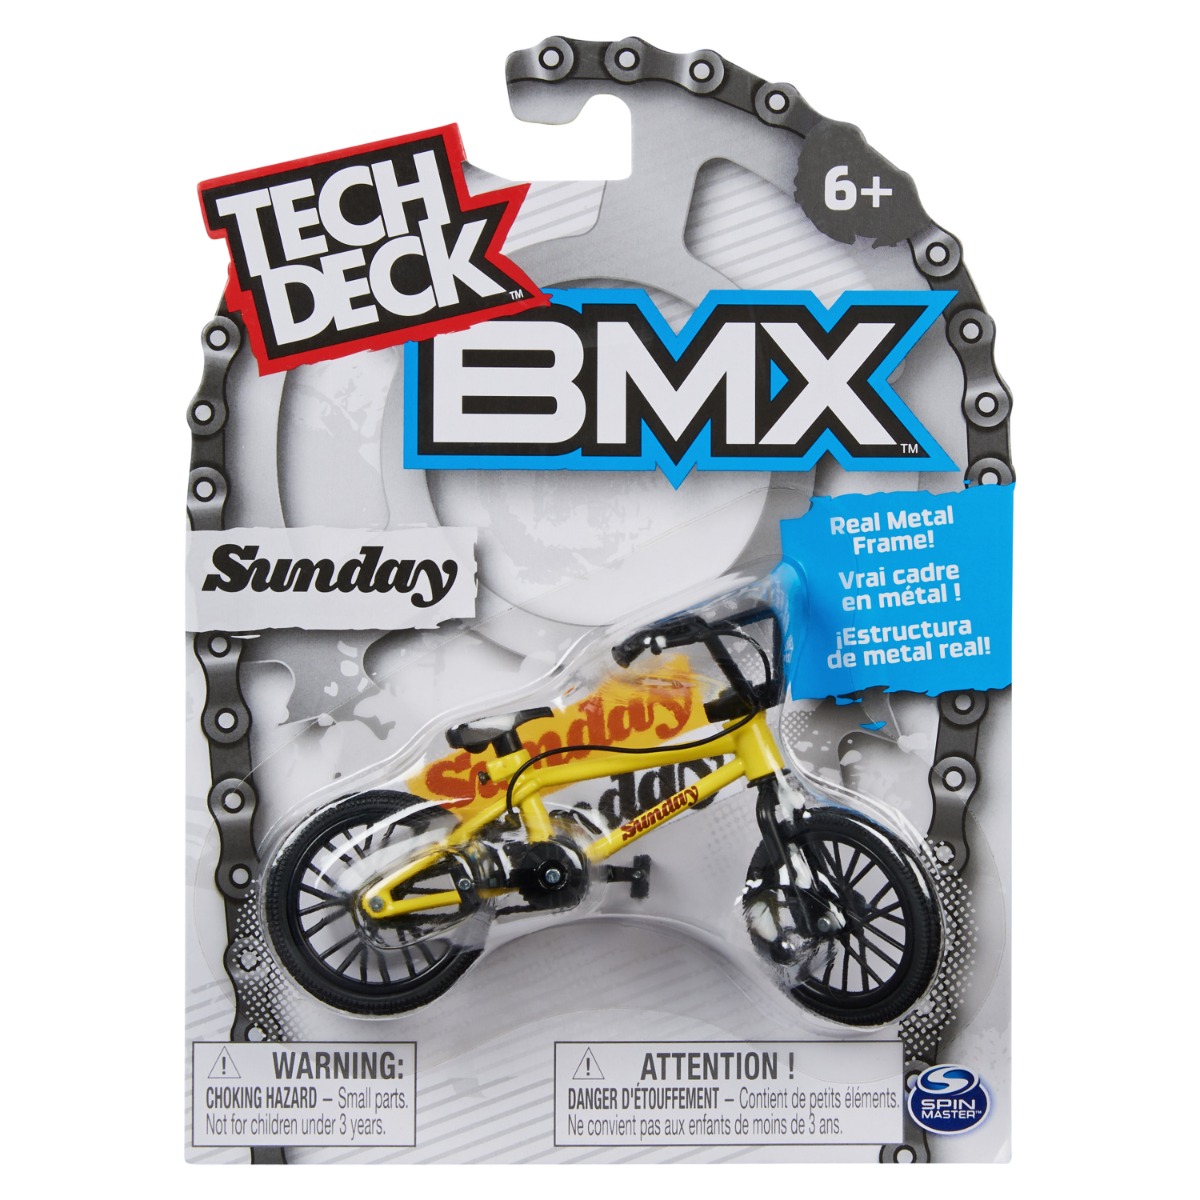 Mini BMX bike, Tech Deck, Sunday, 20140830 20140830 imagine 2022